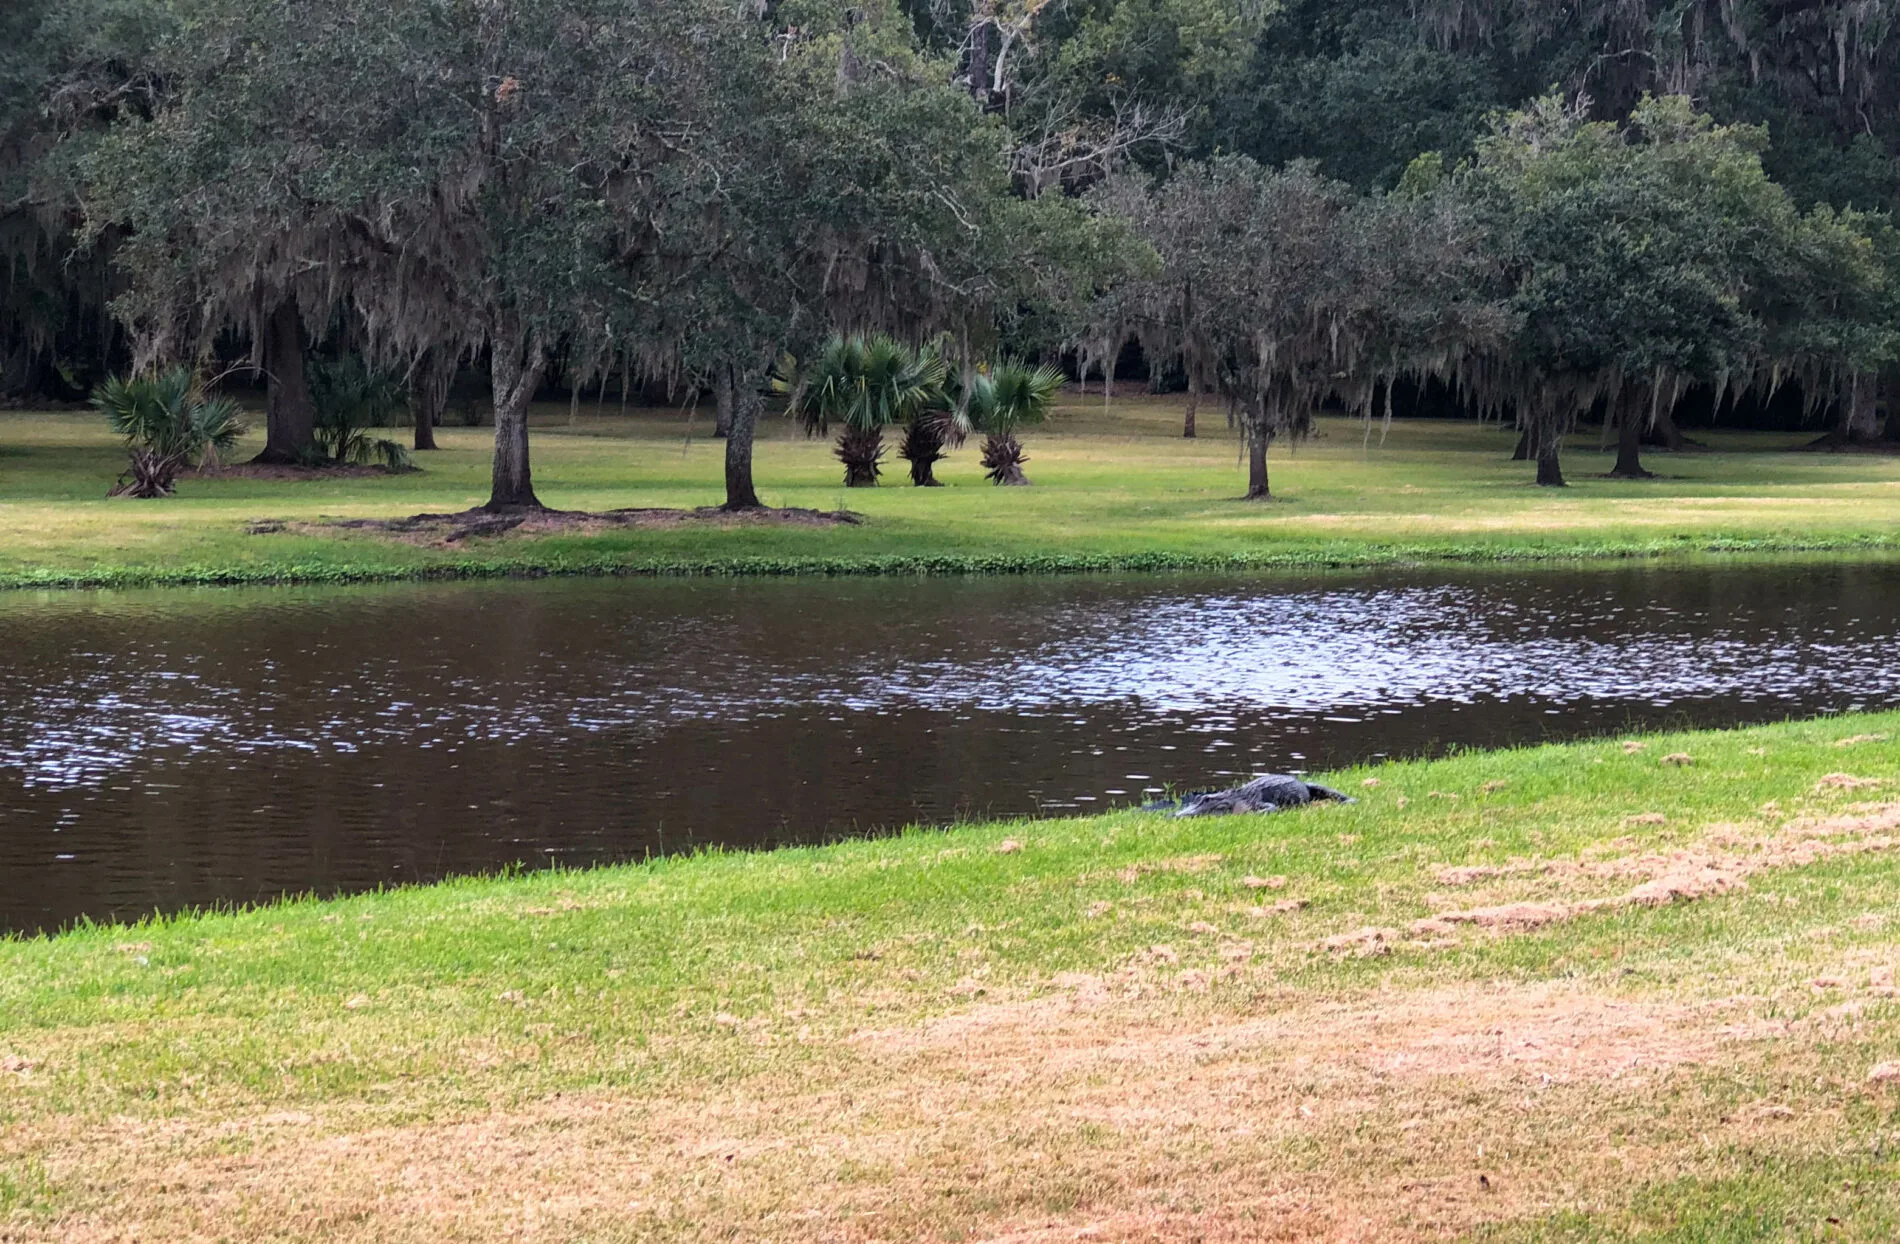 An alligator sunning on the bank of a bayou in Avery Island’s Jungle Garden.